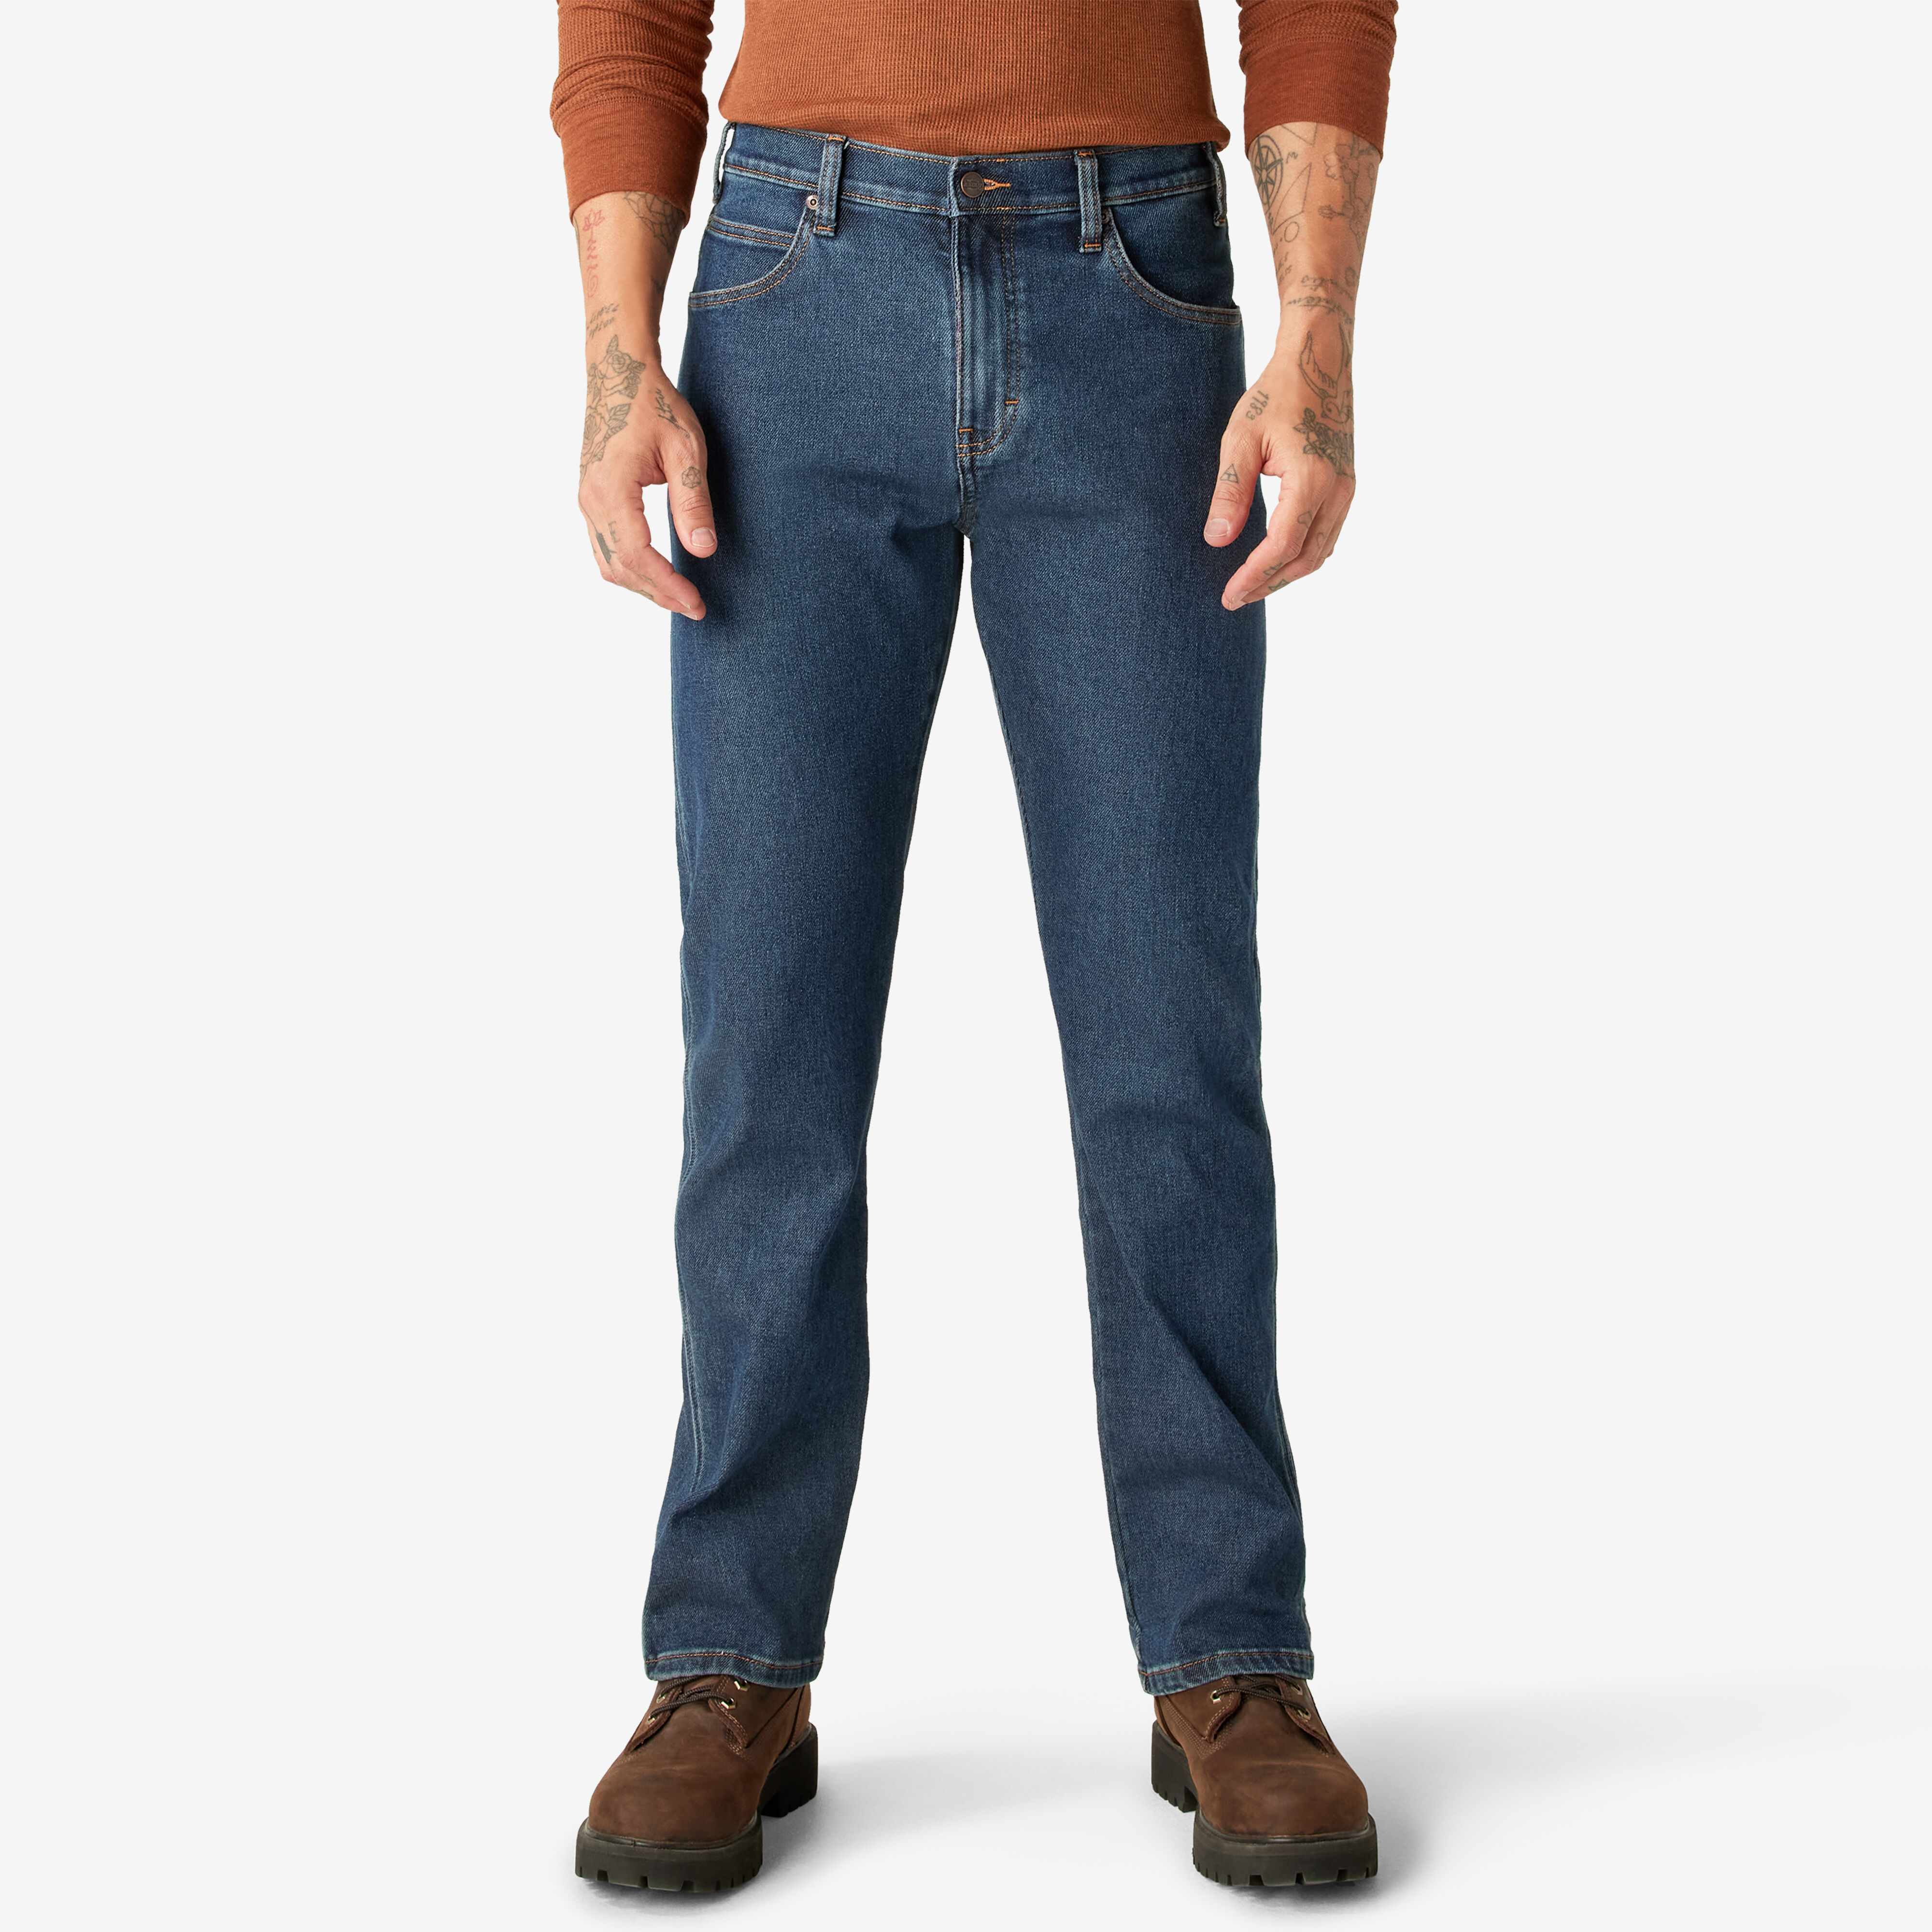 men's flannel lined jeans